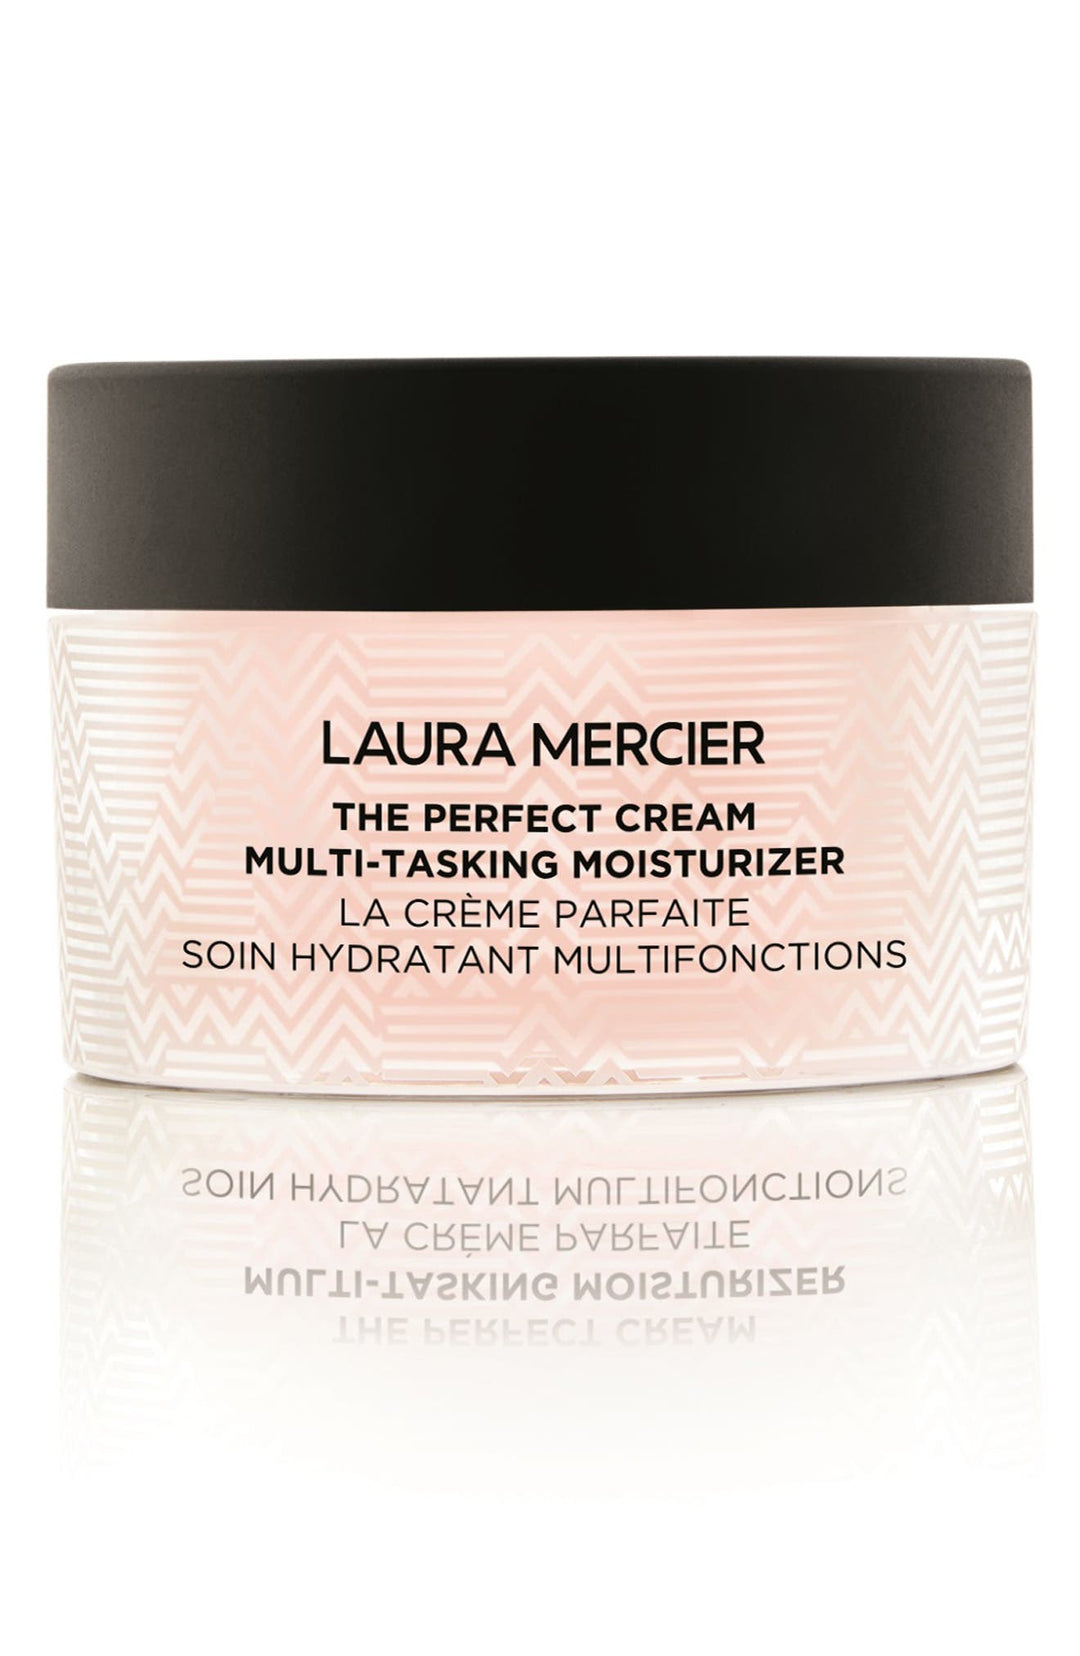 Laura Mercier The Perfect Cream Multitasking Moisturizer 1.7oz